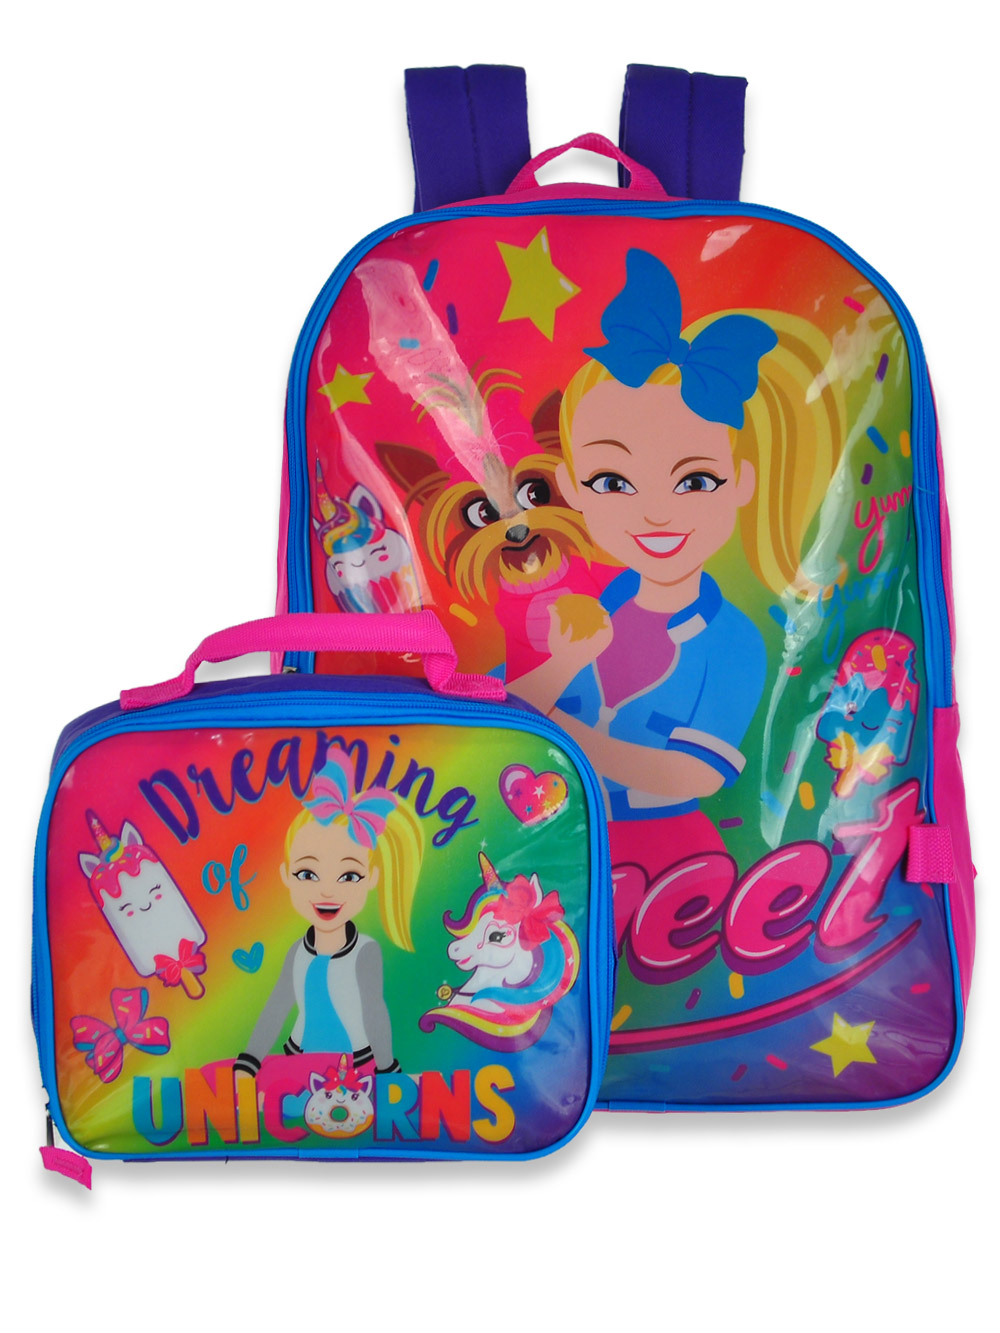 Jojo Siwa Girls' 2-Piece Unicorn Backpack with Lunchbox Set - Pink/Multi, One Size